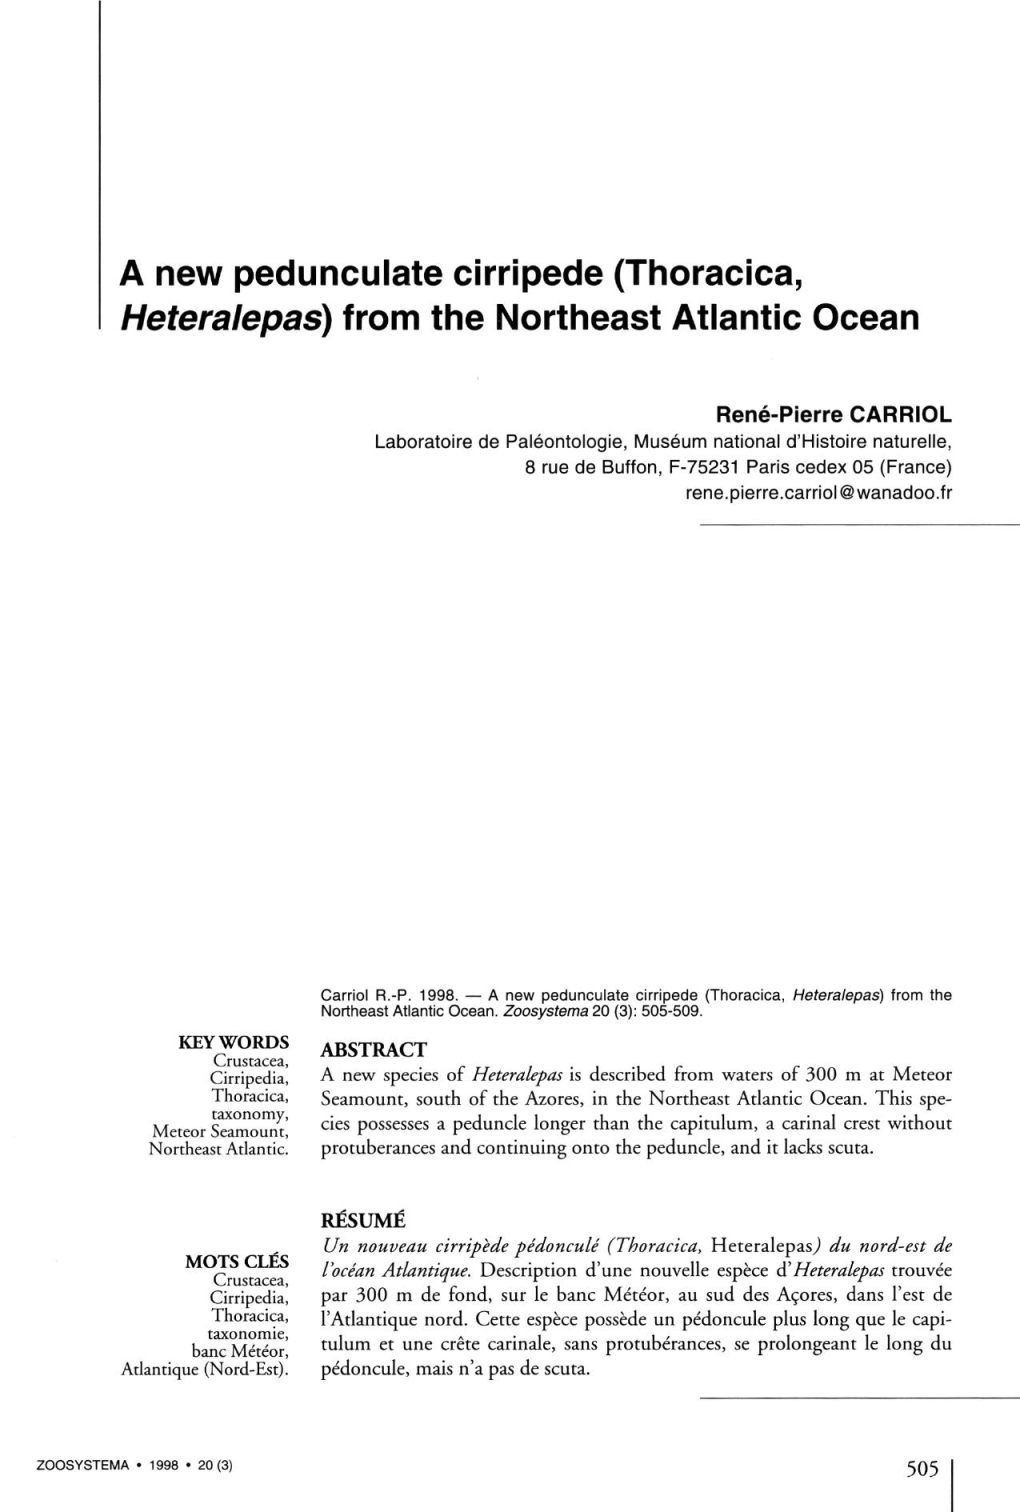 A New Pedunculate Cirripède (Thoracica, Heteralepas) from the Northeast Atlantic Océan